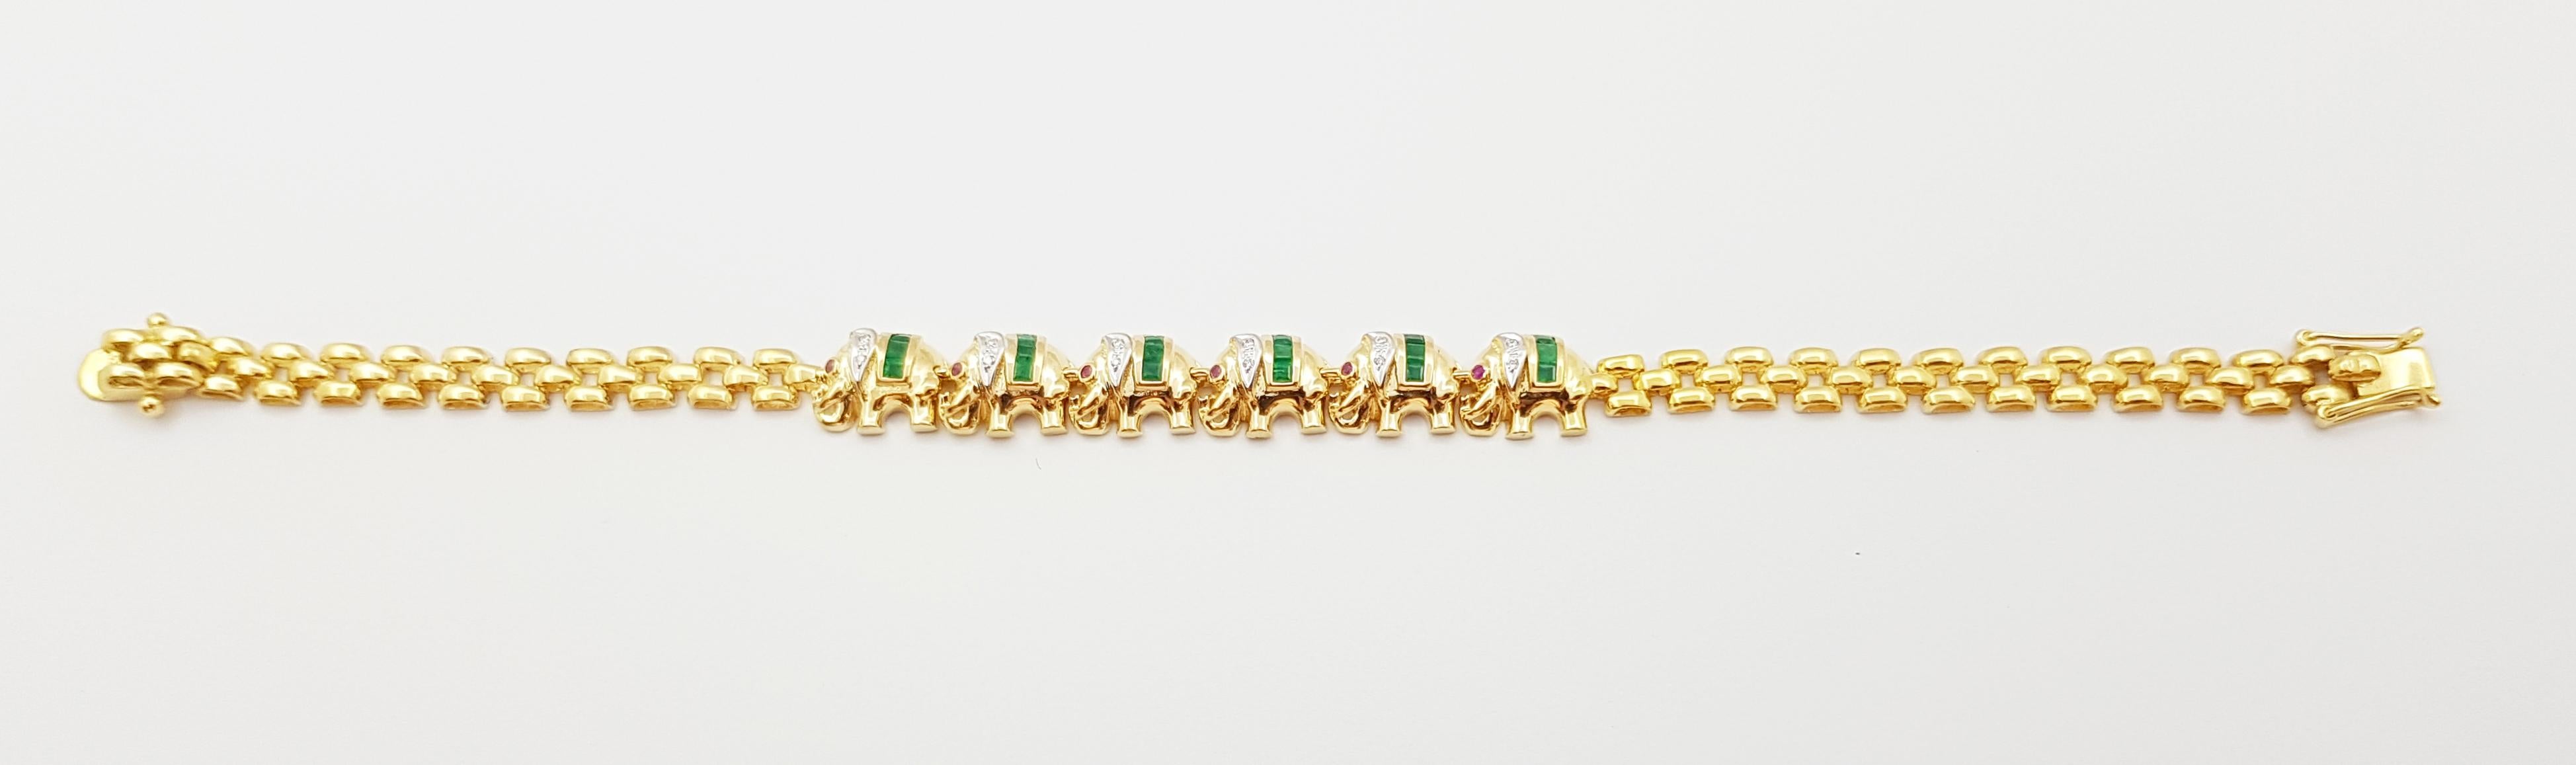 Emerald with Ruby Elephant Bracelet Set in 18 Karat Gold Settings For Sale 6